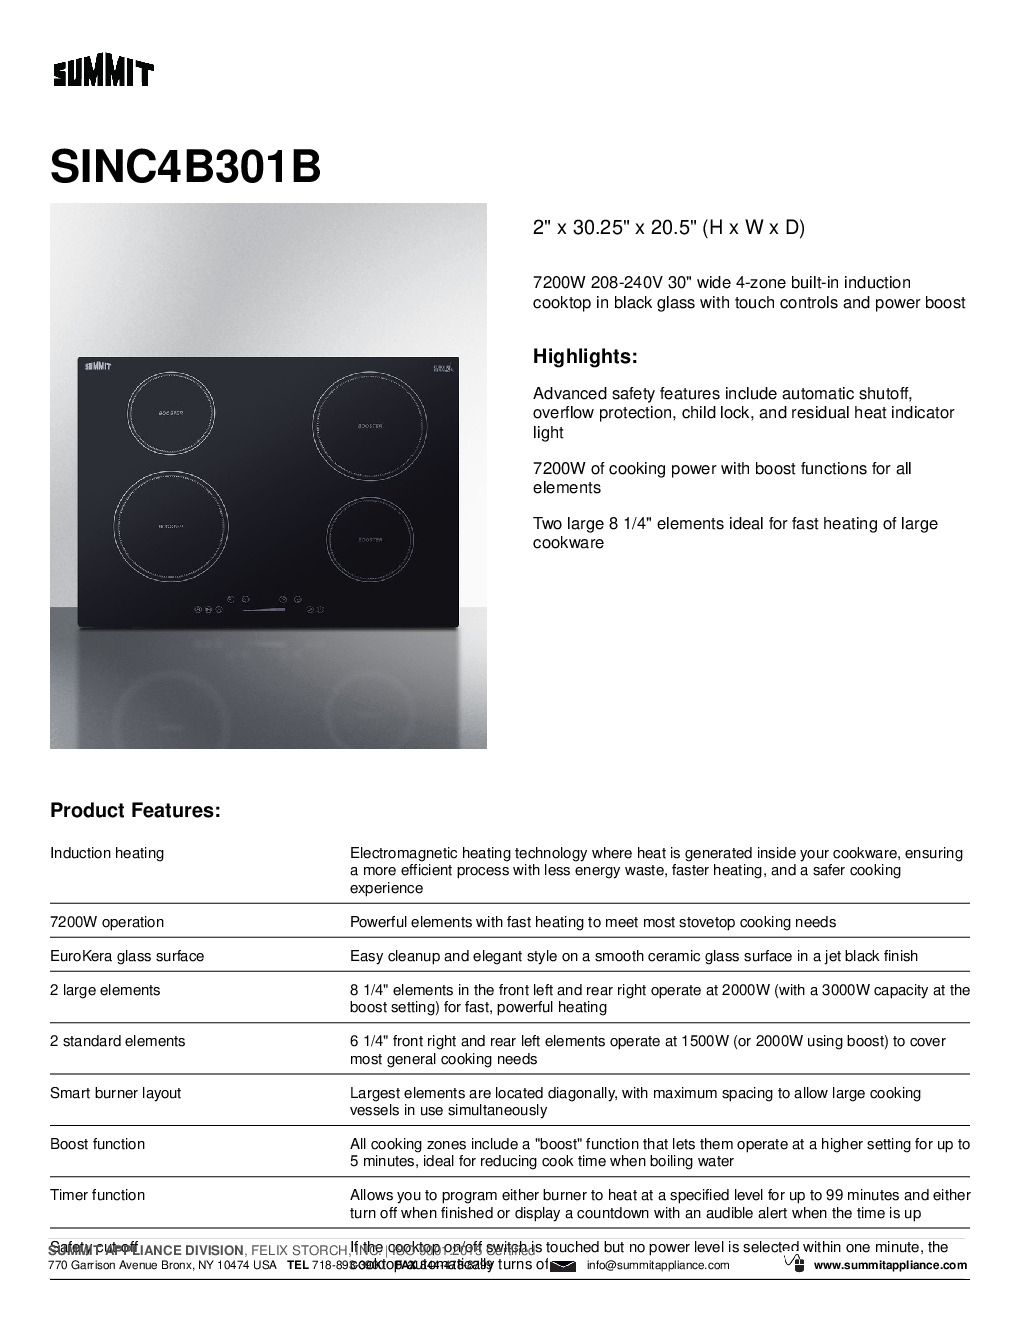 Summit SINC4B301B Built-In / Drop-In Induction Range